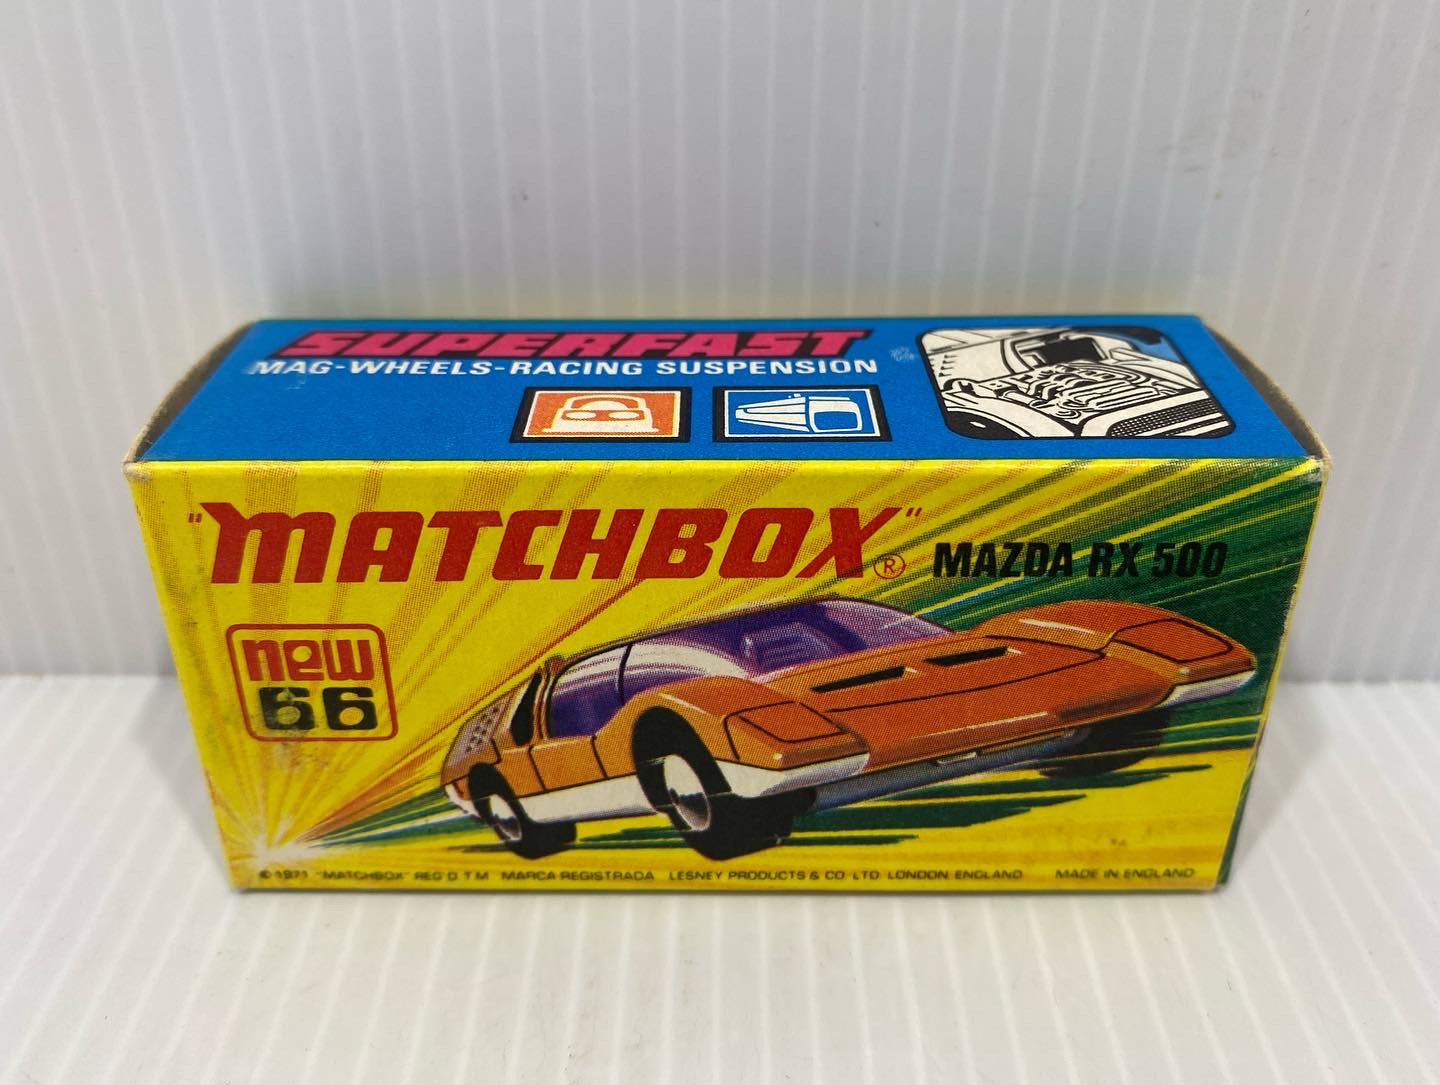 Mazda RX 500 - Matchbox MB66 1972-1974. With original box